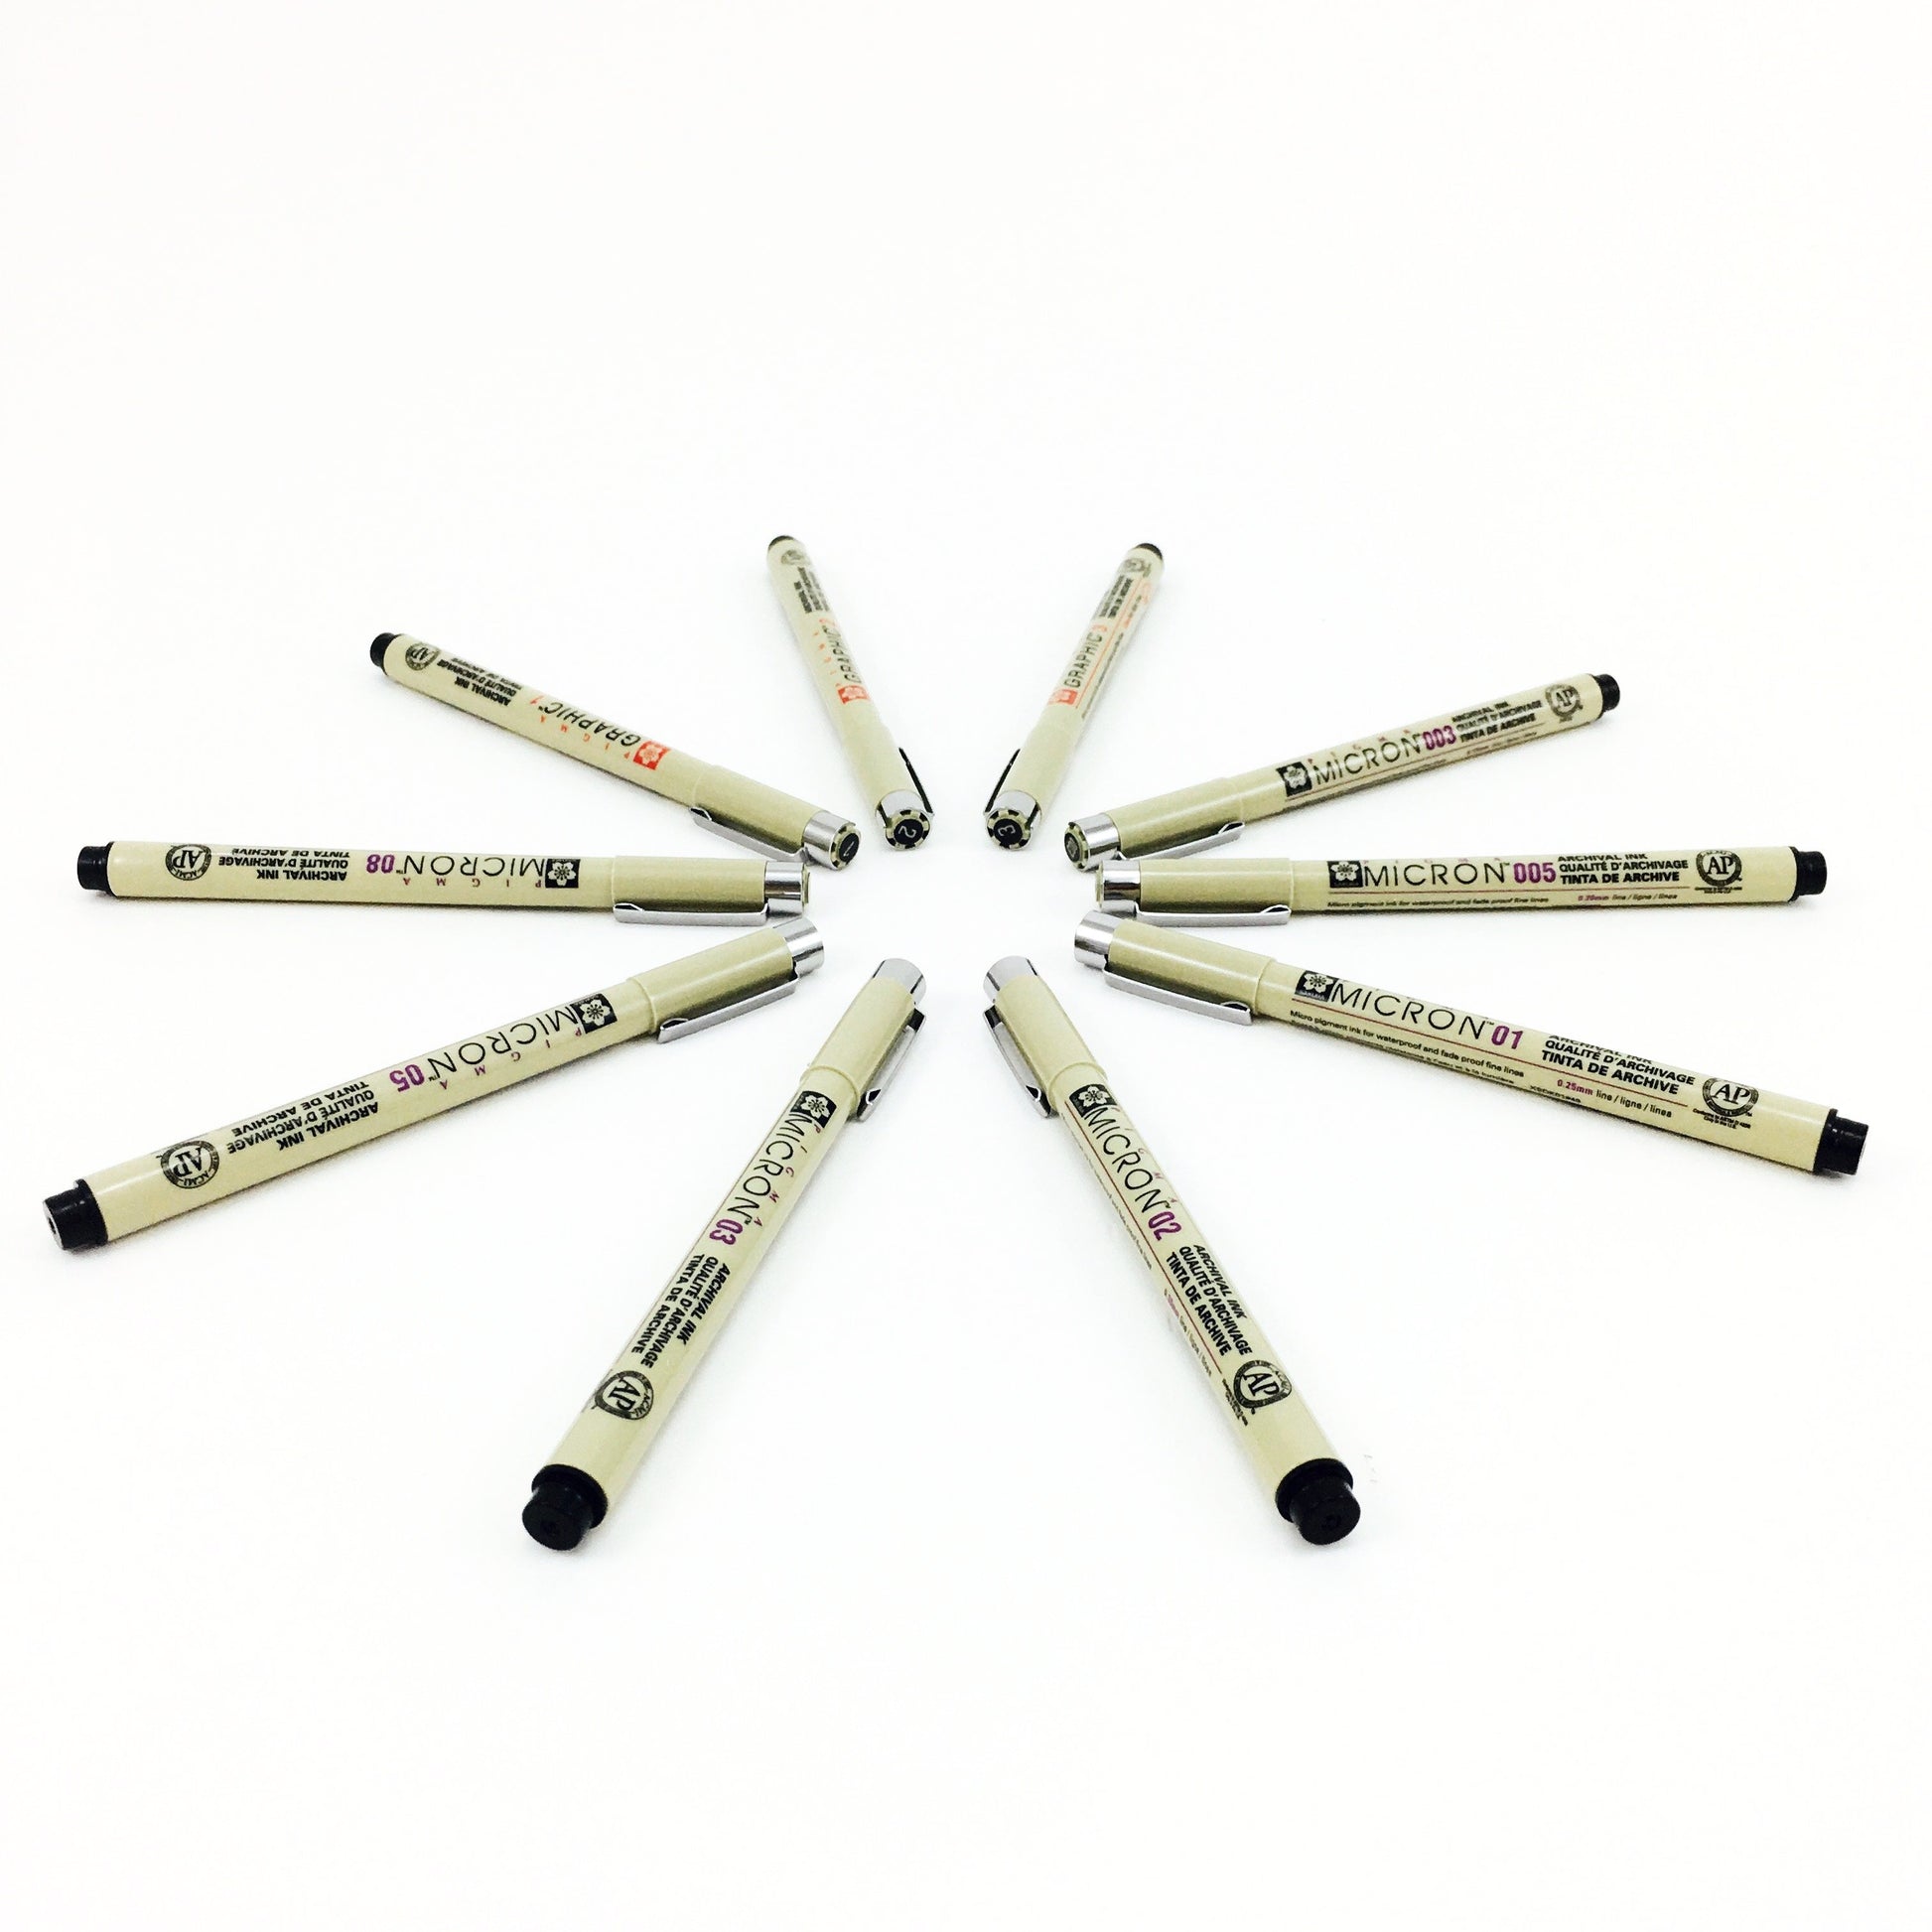 Sakura Pigma Micron Fineliners Black: Set of 6 (+ 1 Brush Pen)